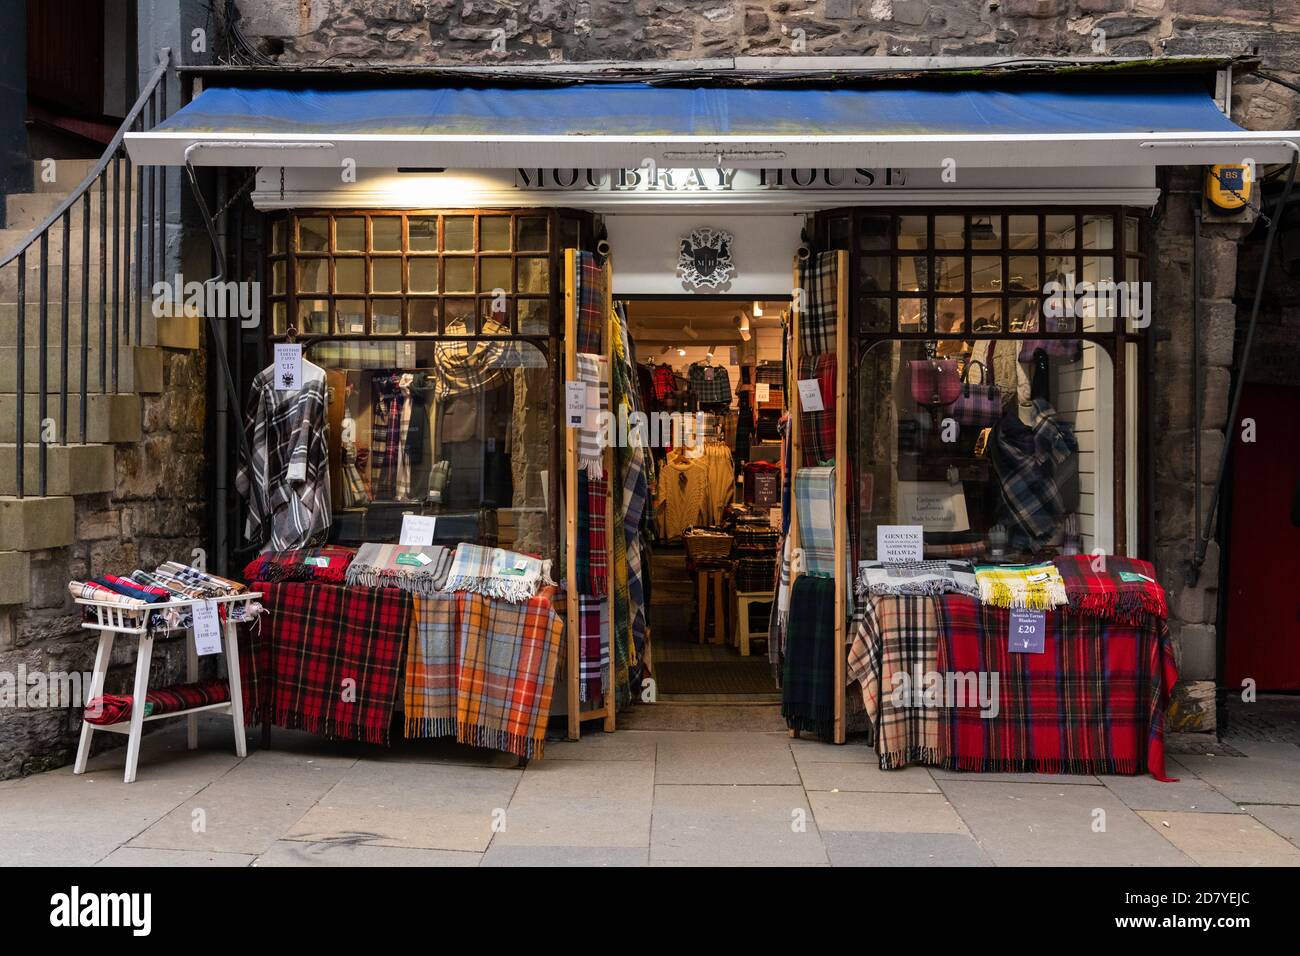 Shop selling tartan blankets Moubray House Edinburgh, Scotland, UK Stock Photo